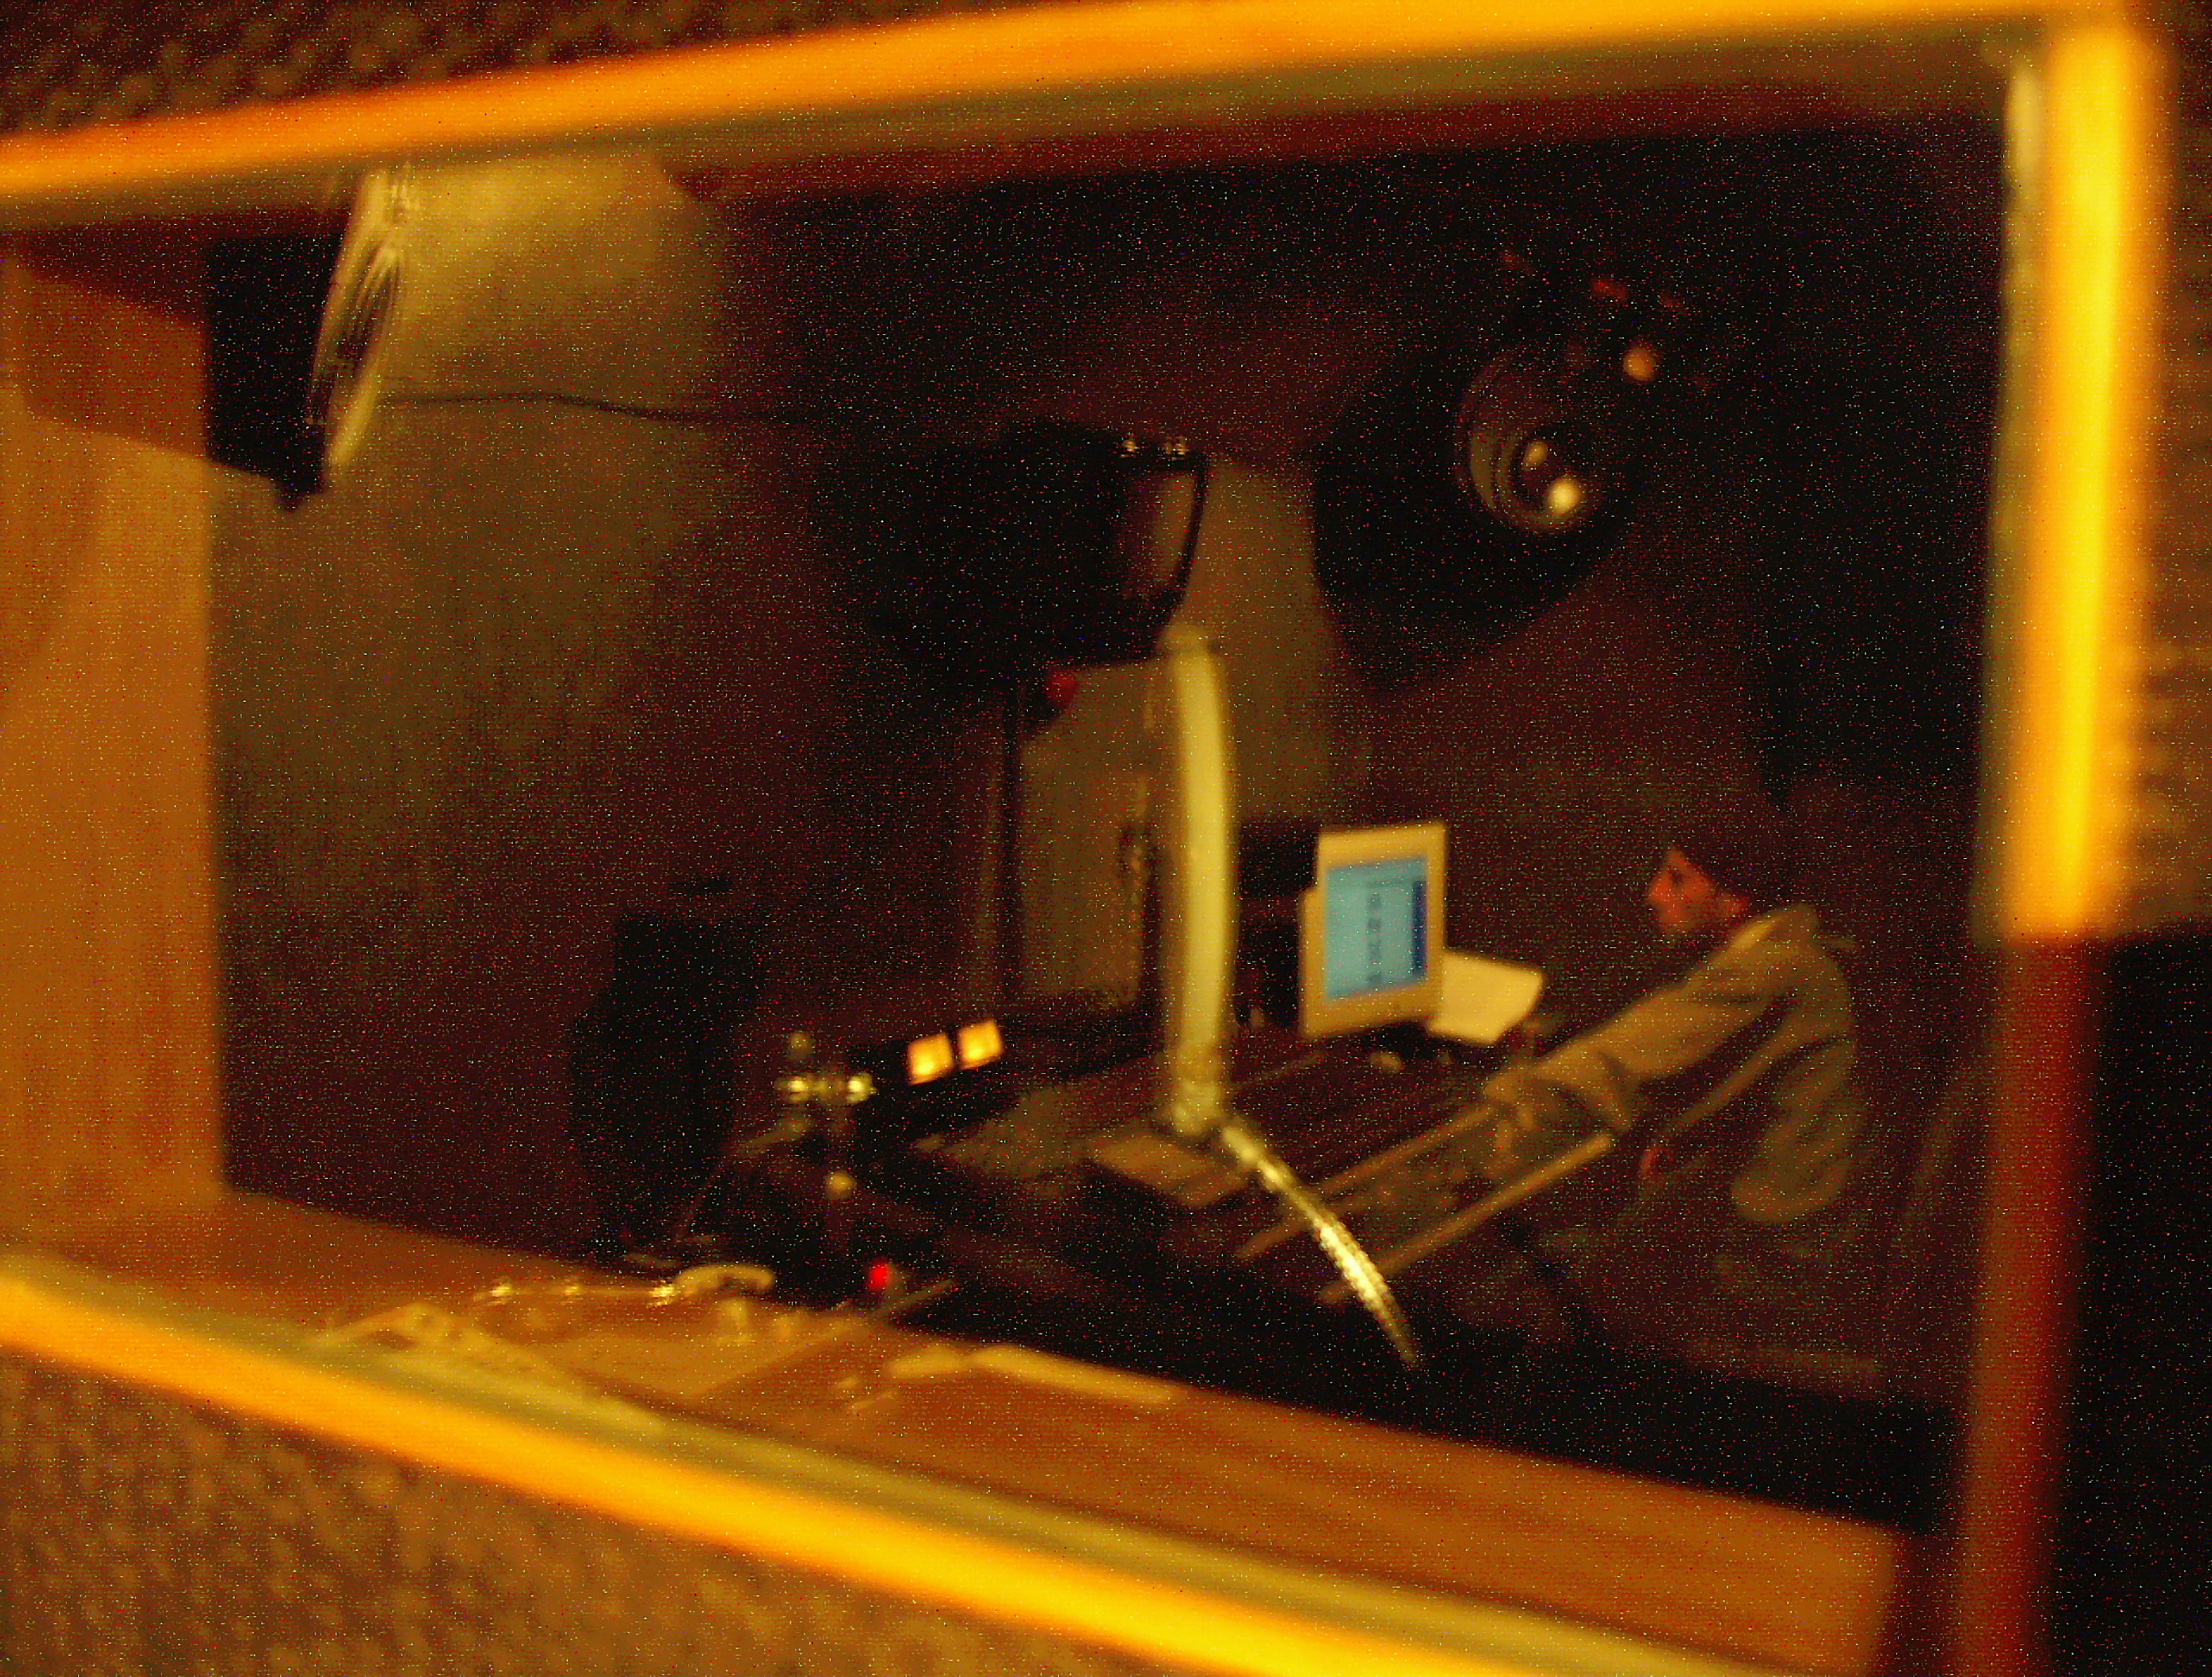 In the studio